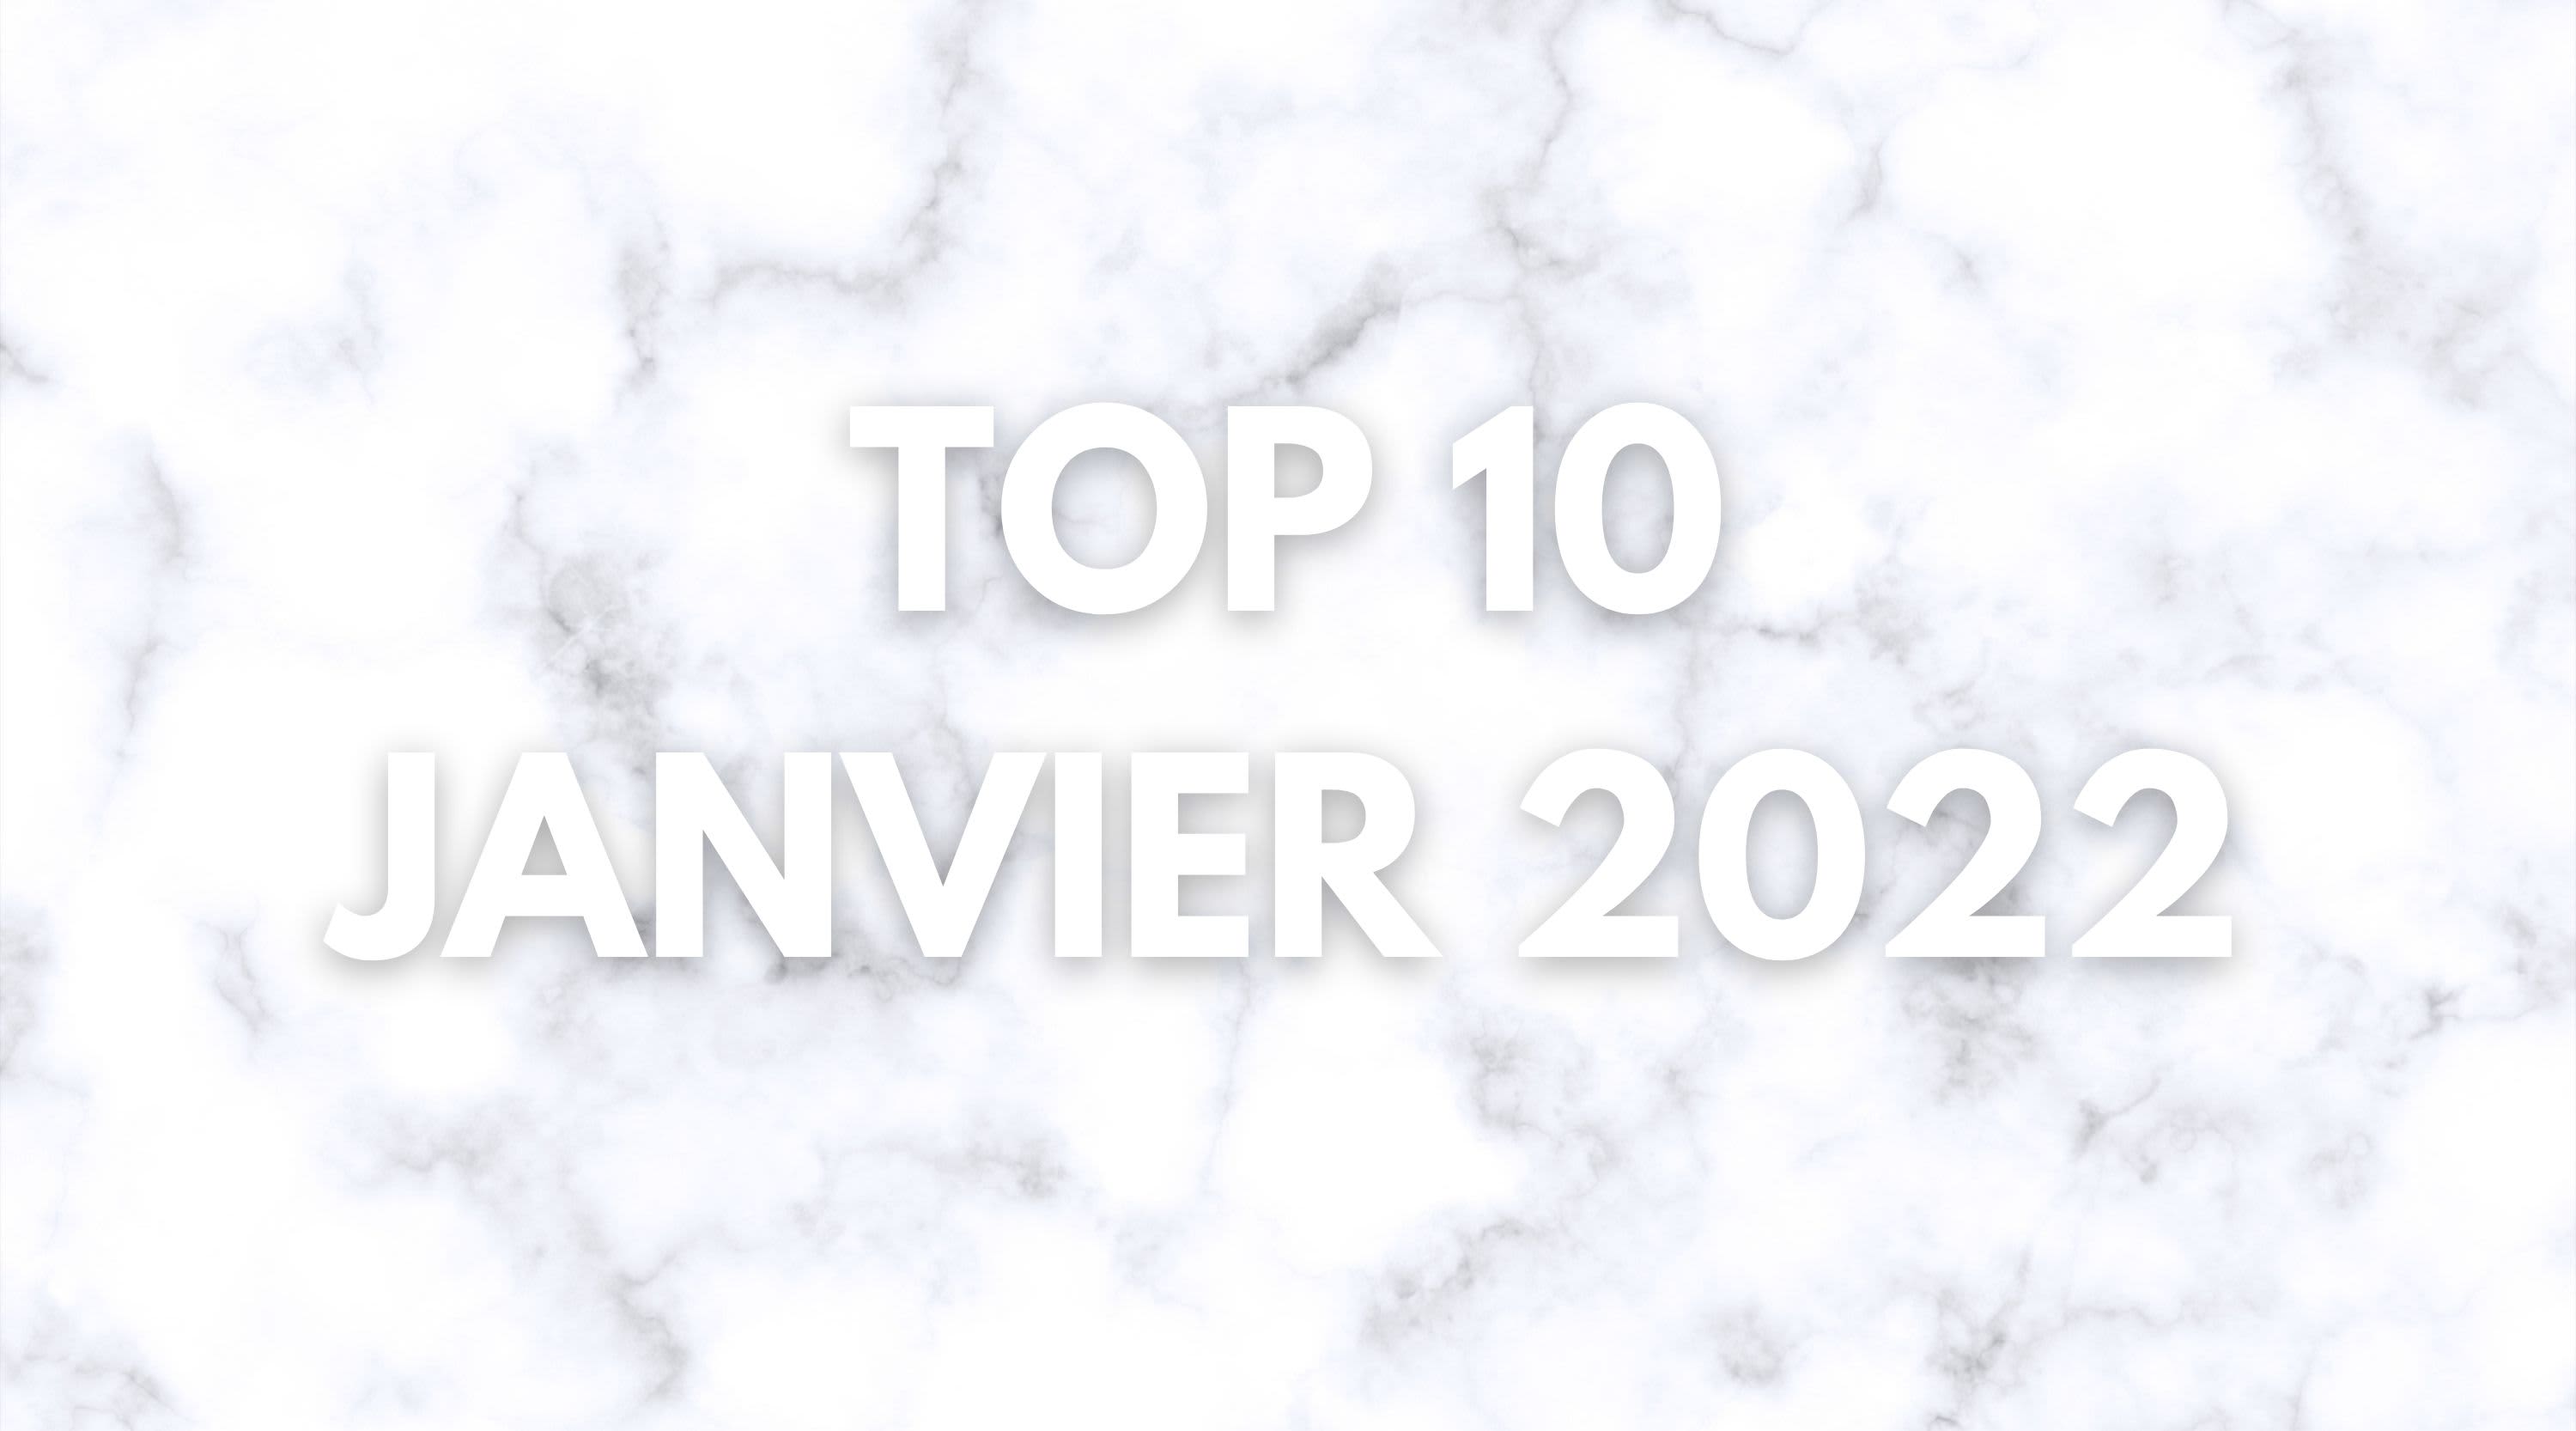 Top 10 janvier 2022